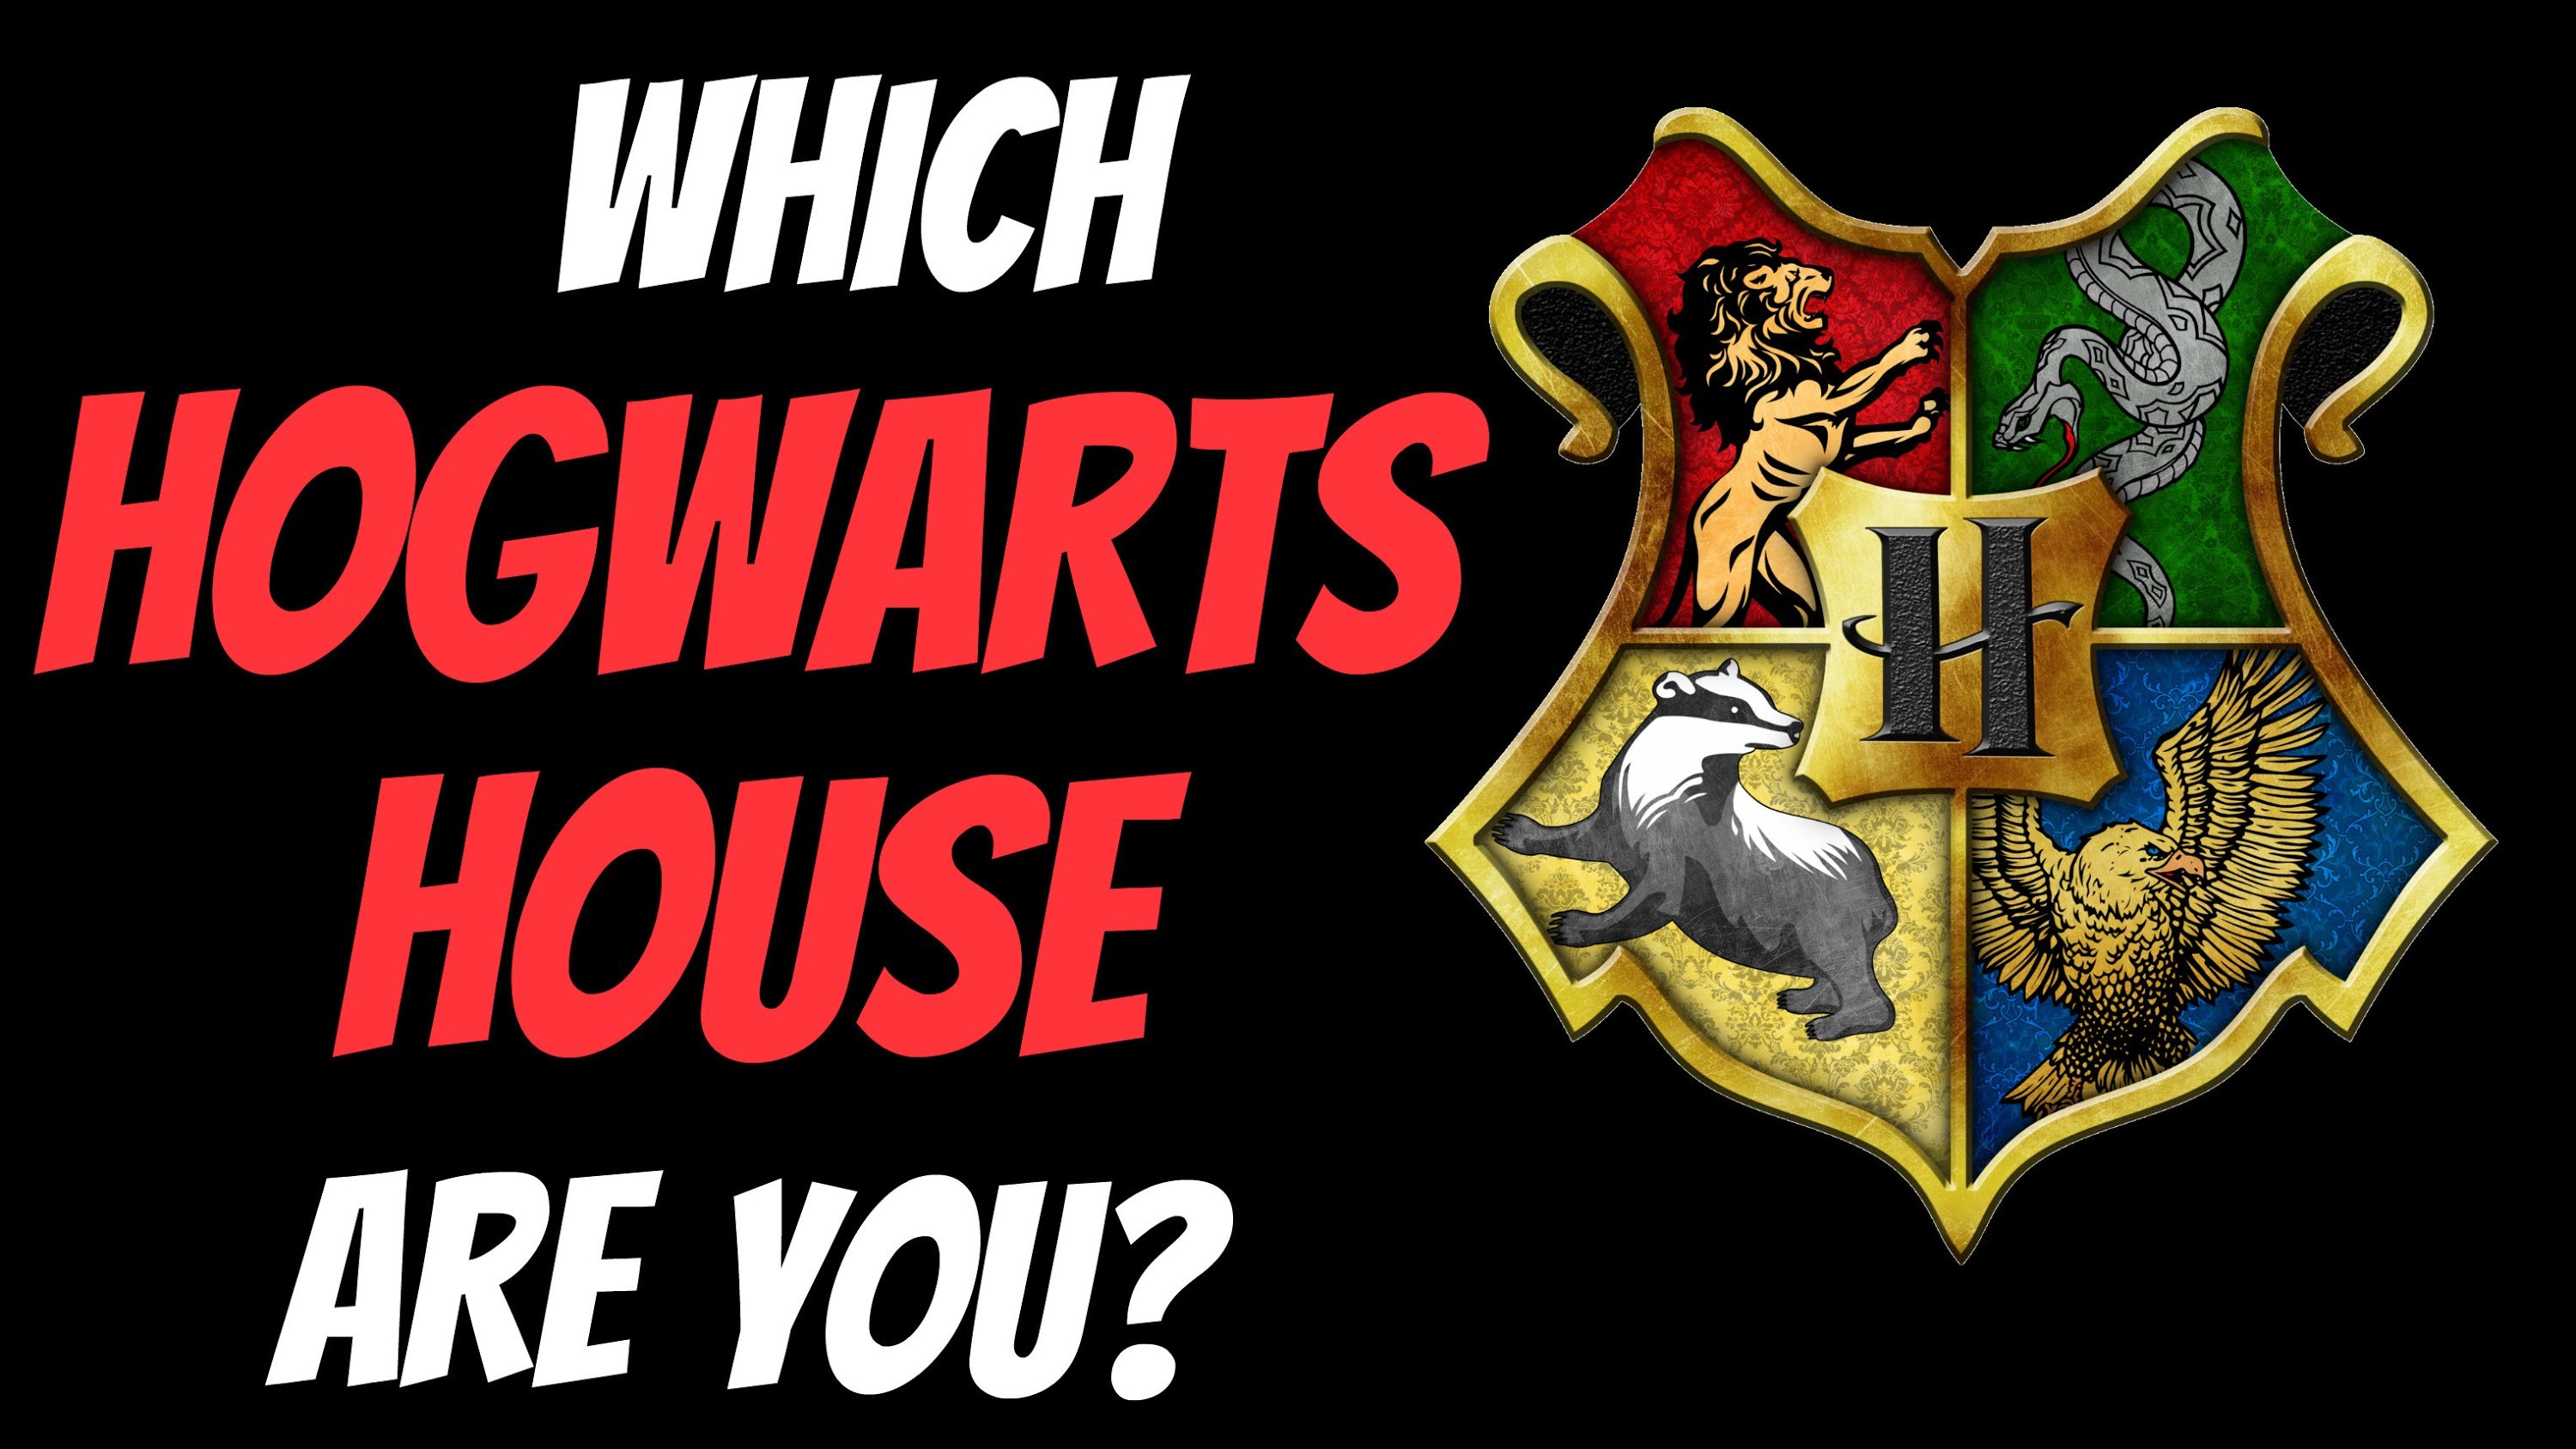 hogwarts logo wallpaper,logo,font,graphics,banner,competition event